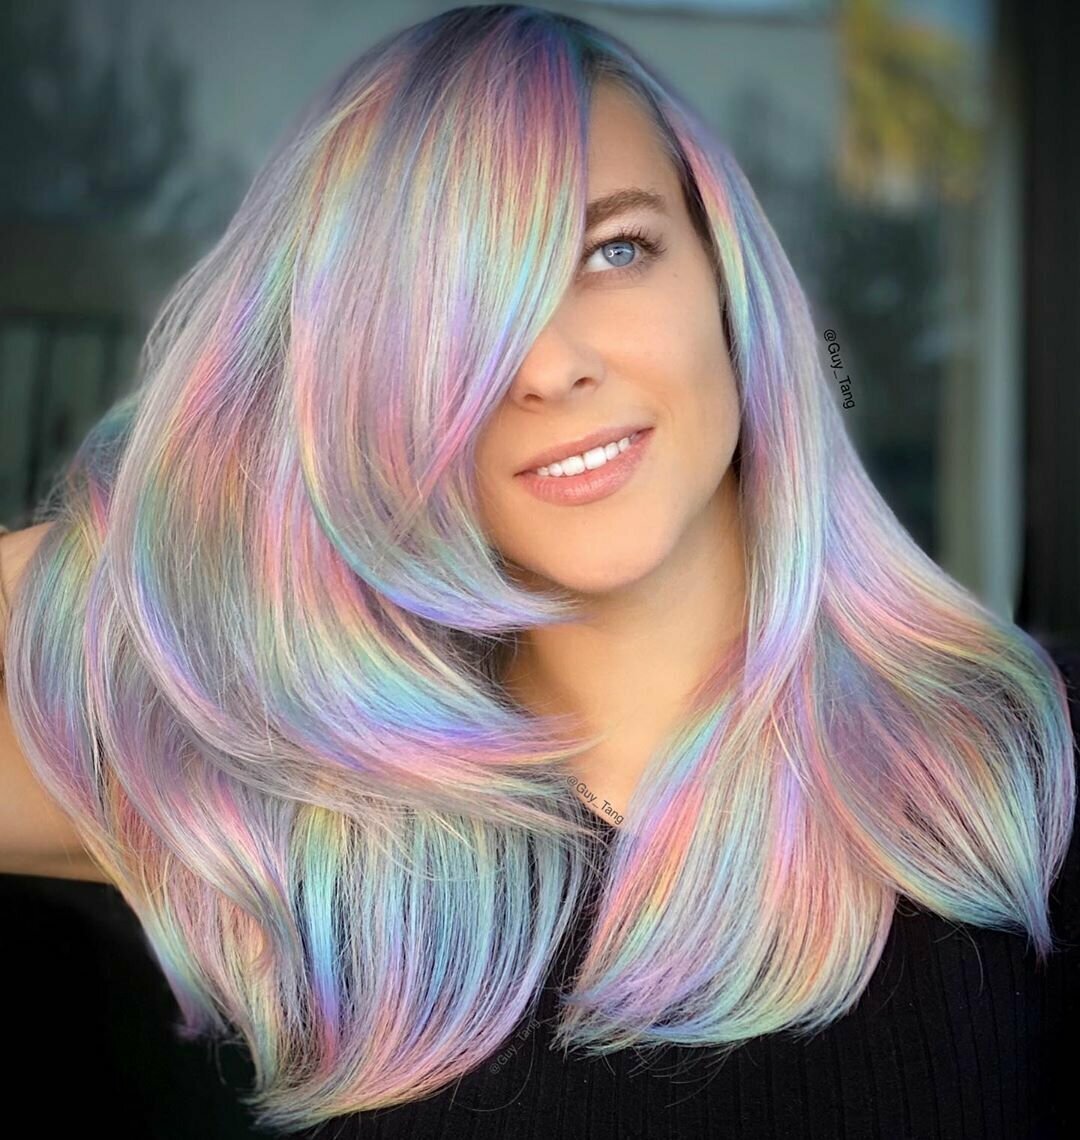 Rainbow Neon Glowing Hair 